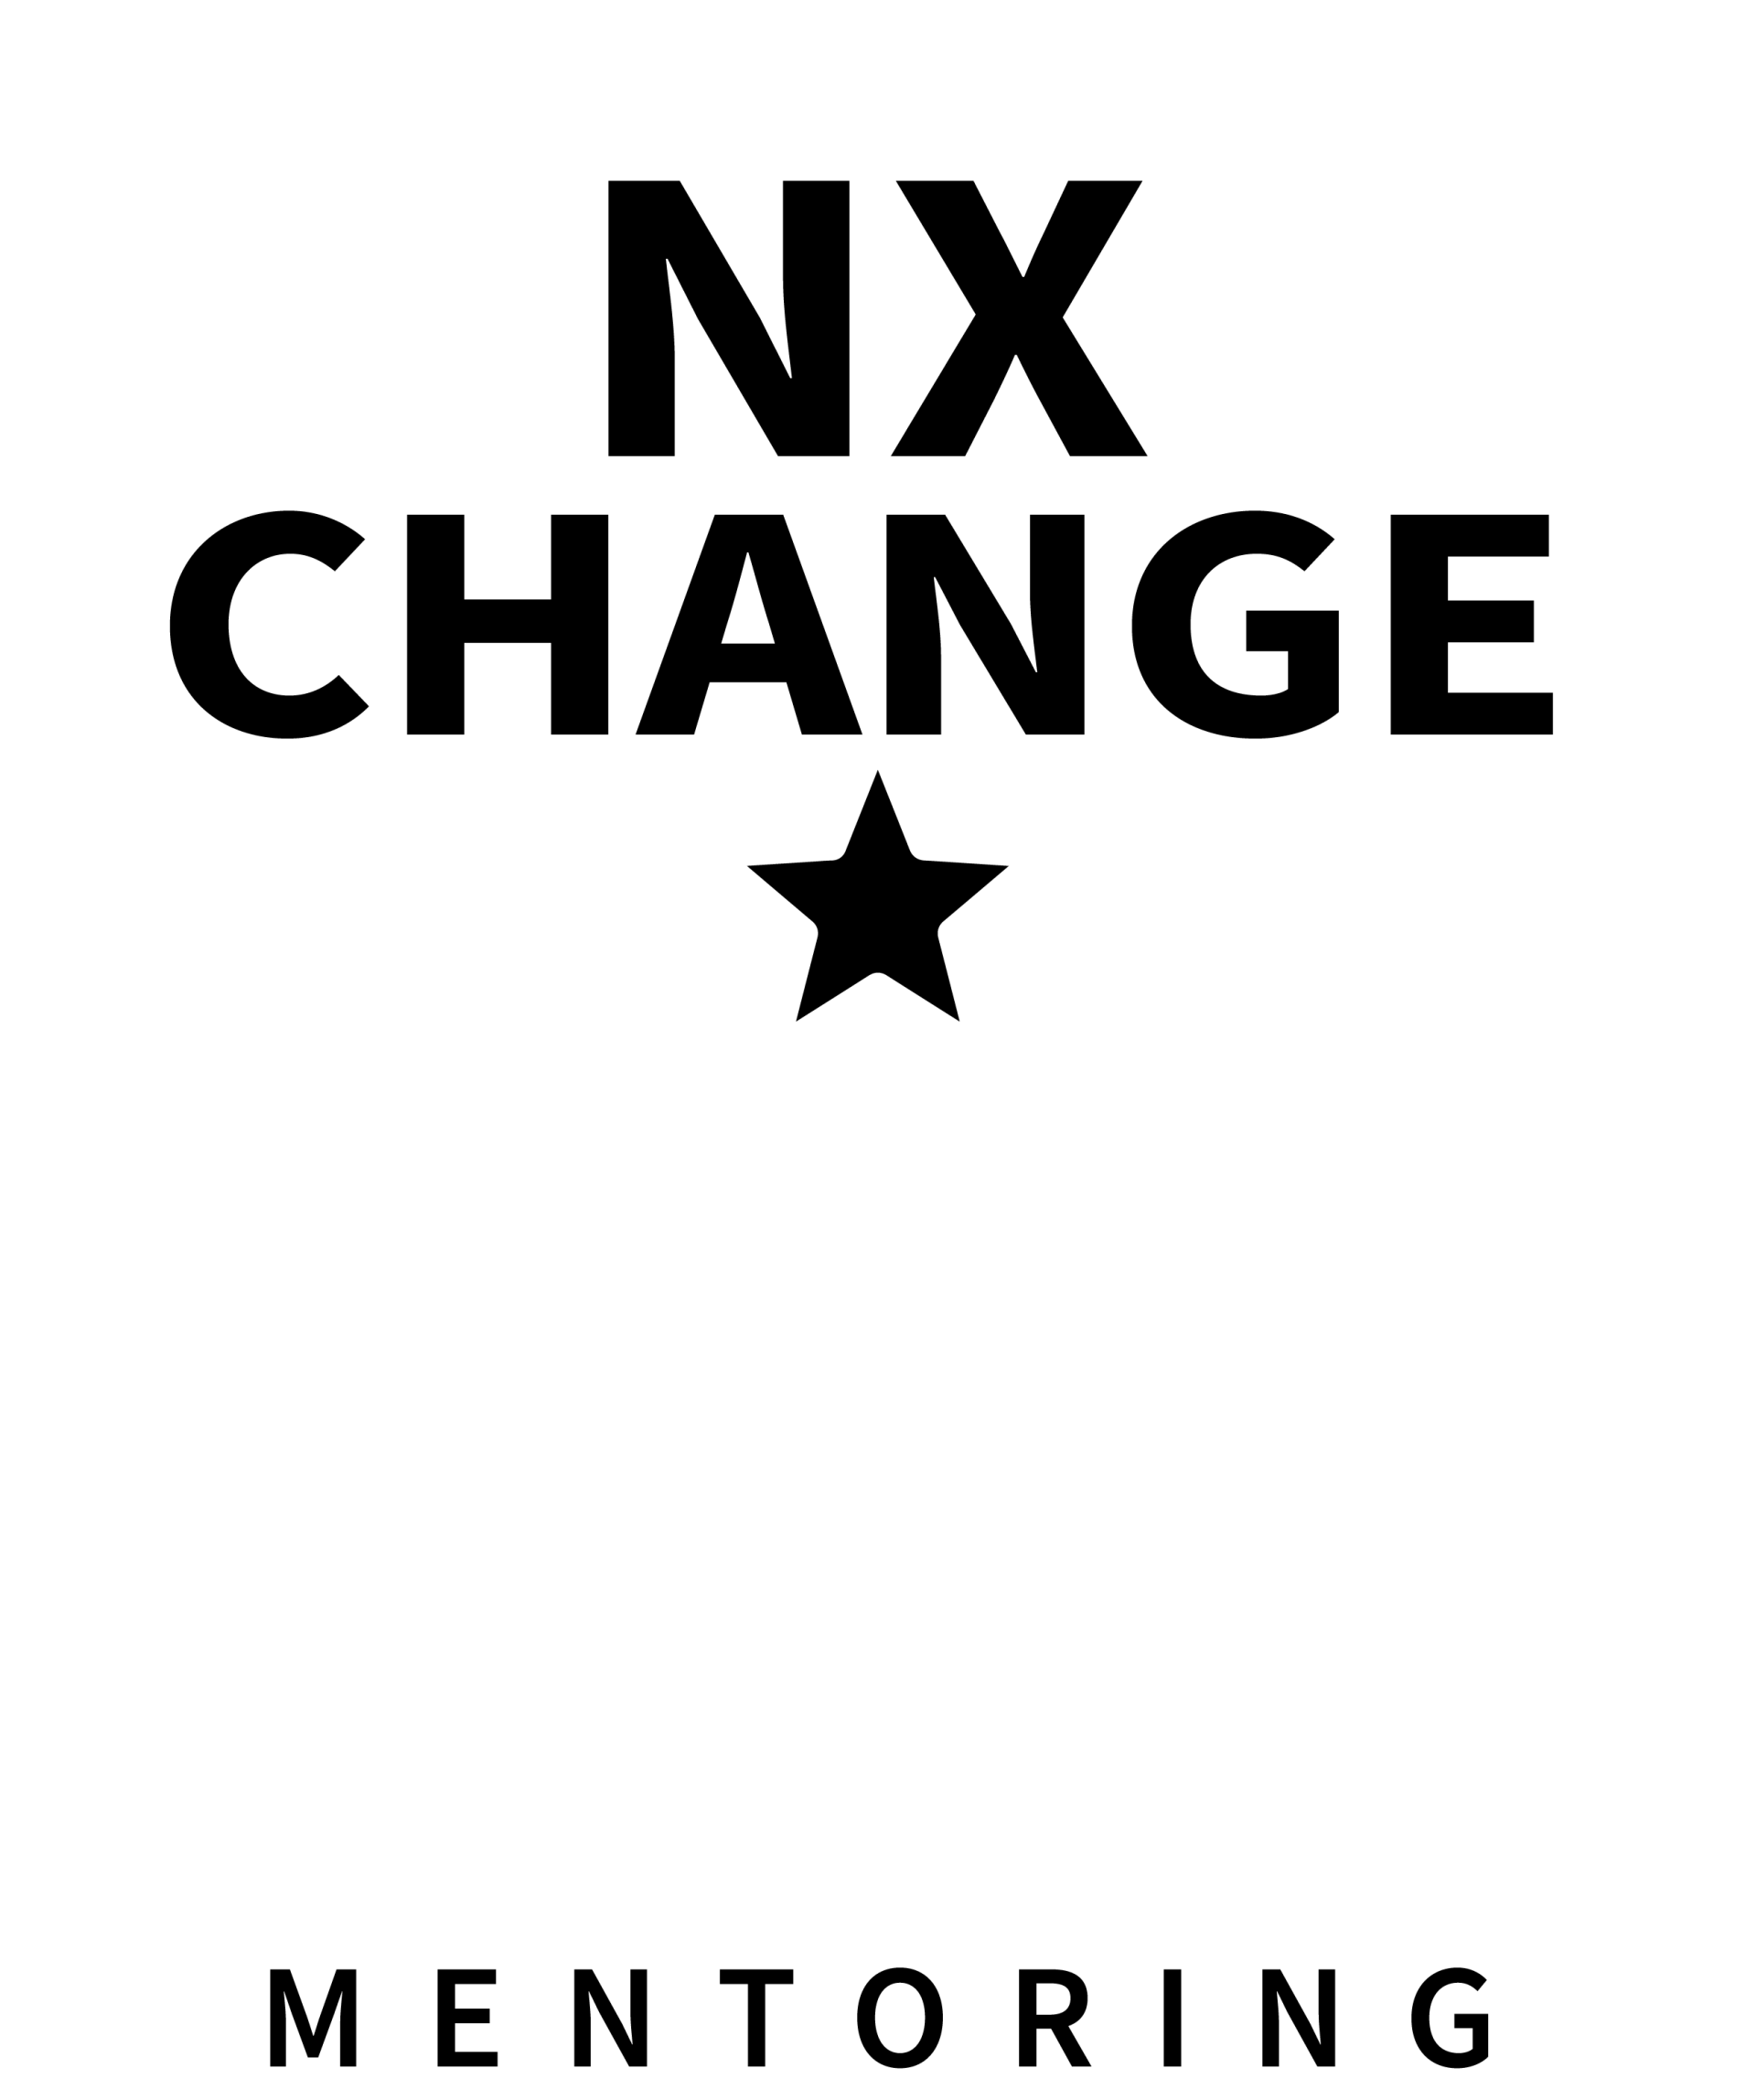 NX Change for Freedom logo